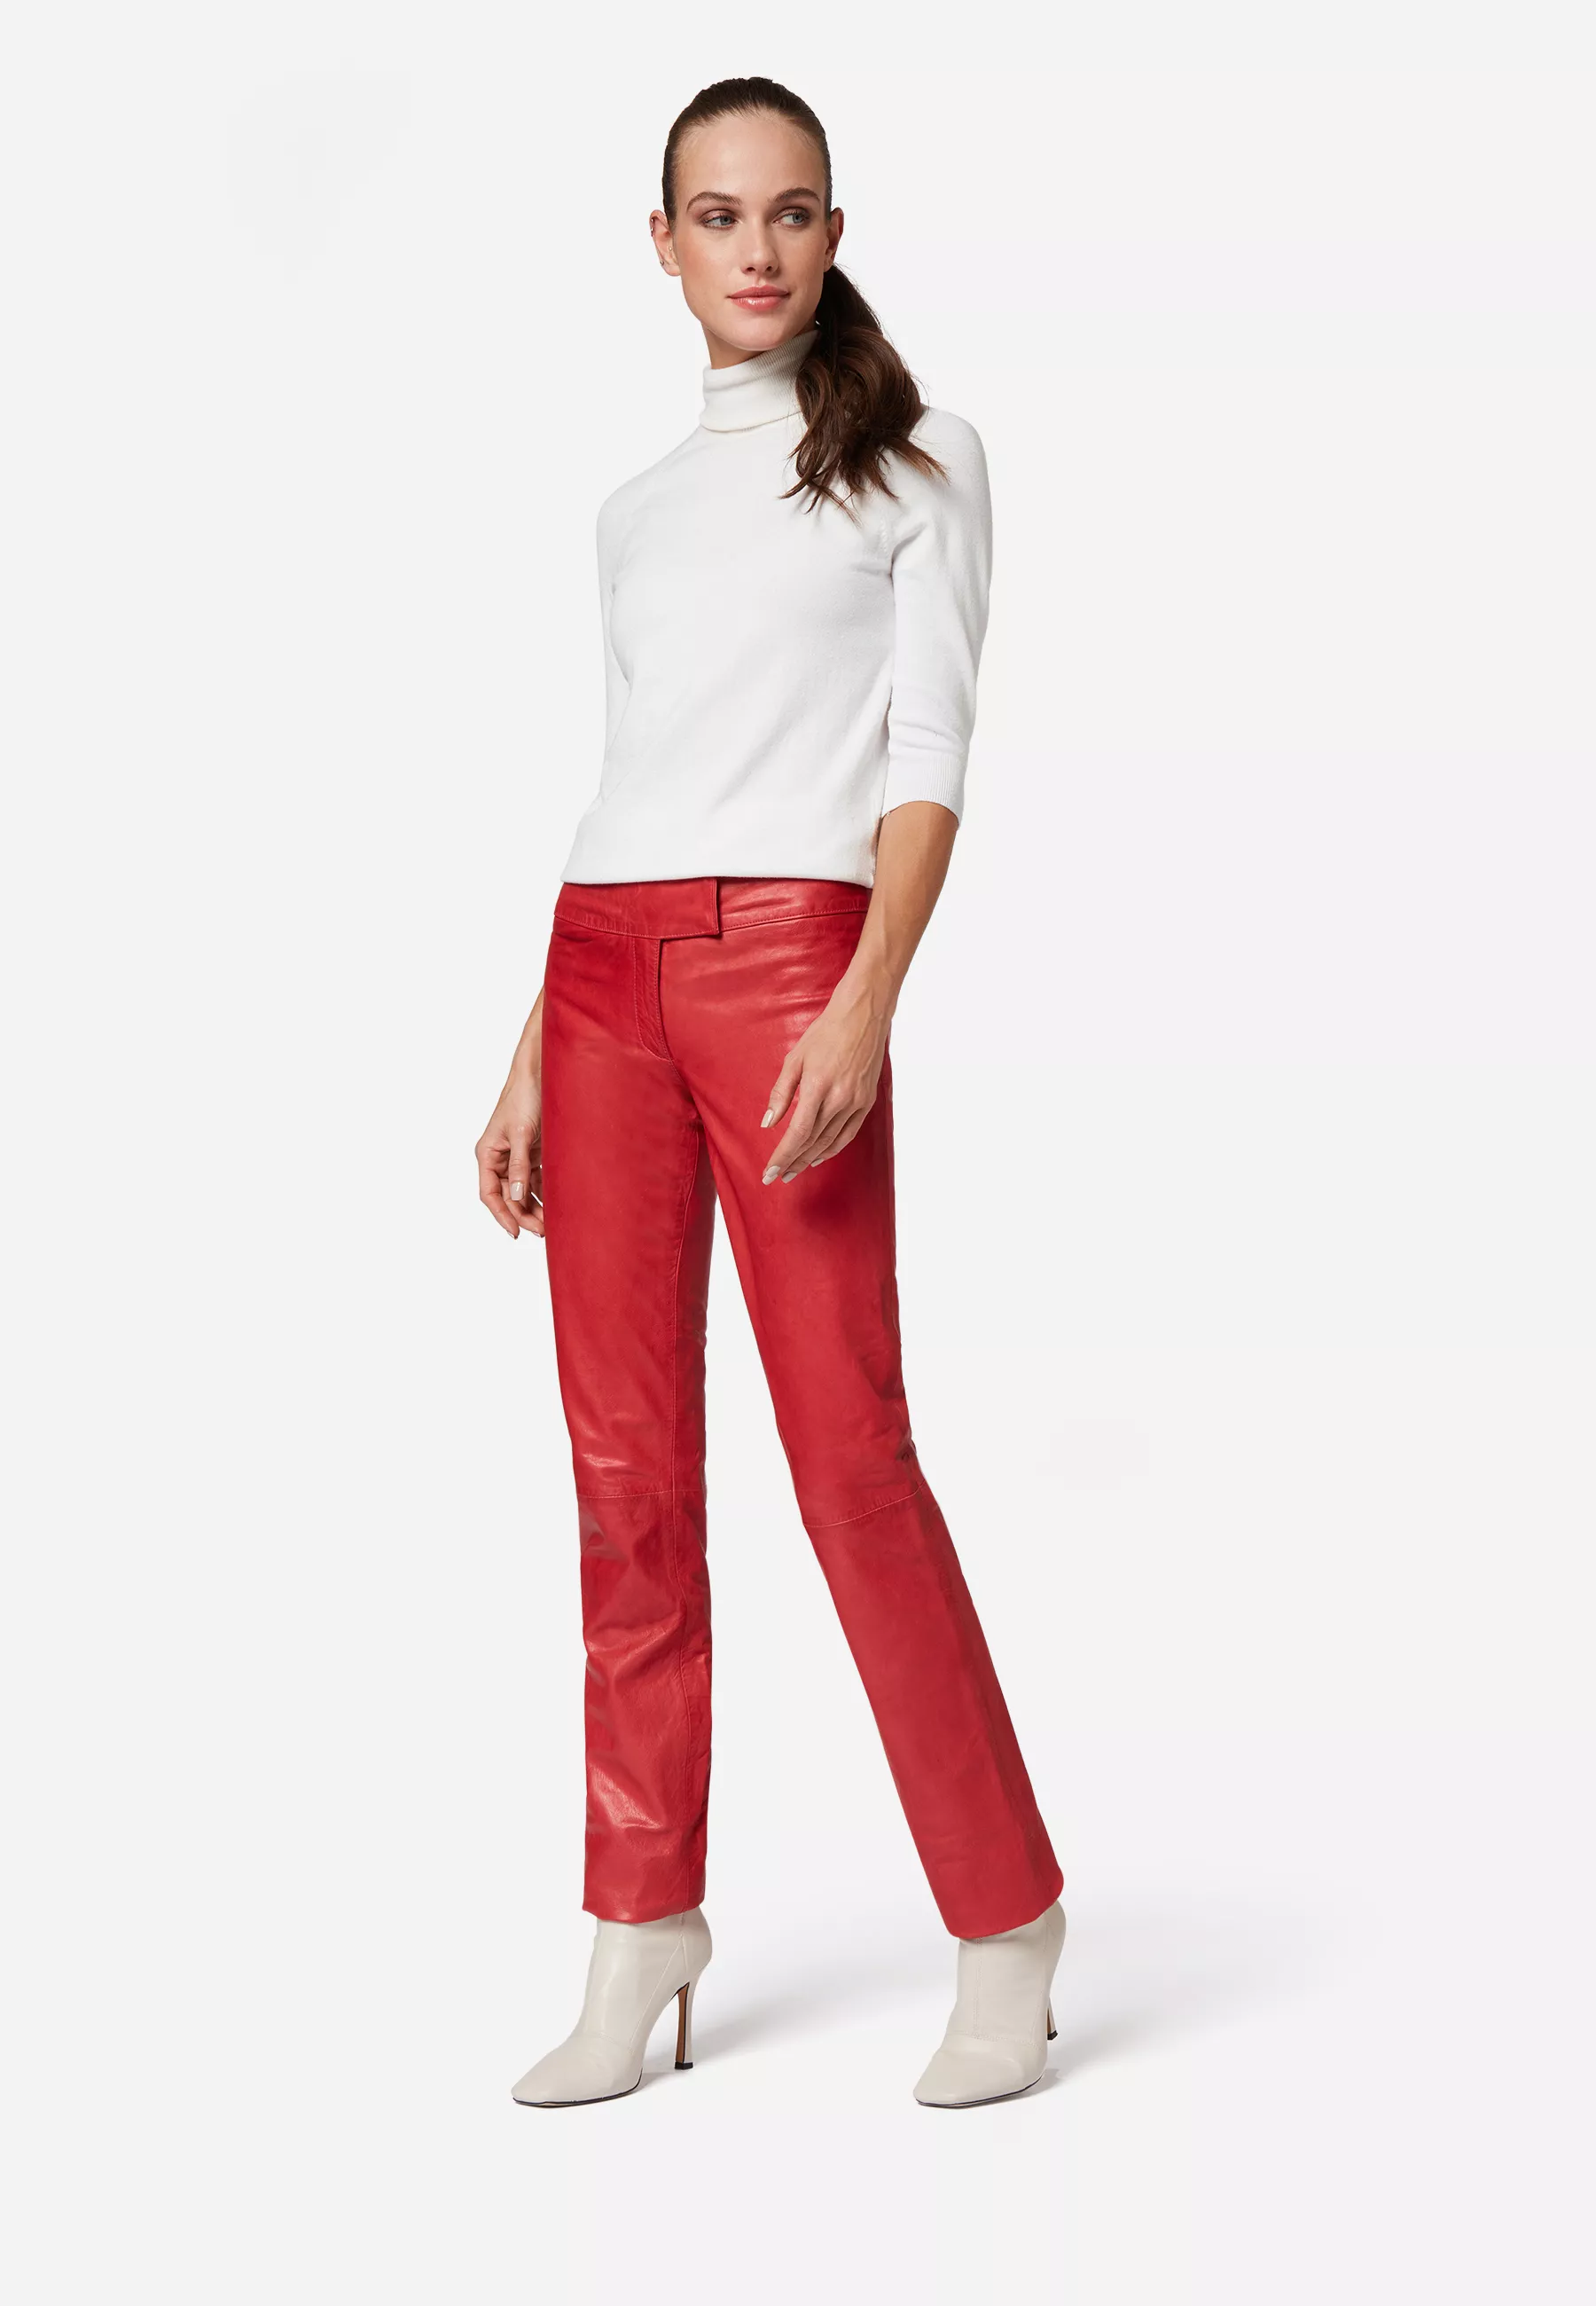 Damen Lederhose Low Cut in Rot von Ricano, Vollansicht am Model